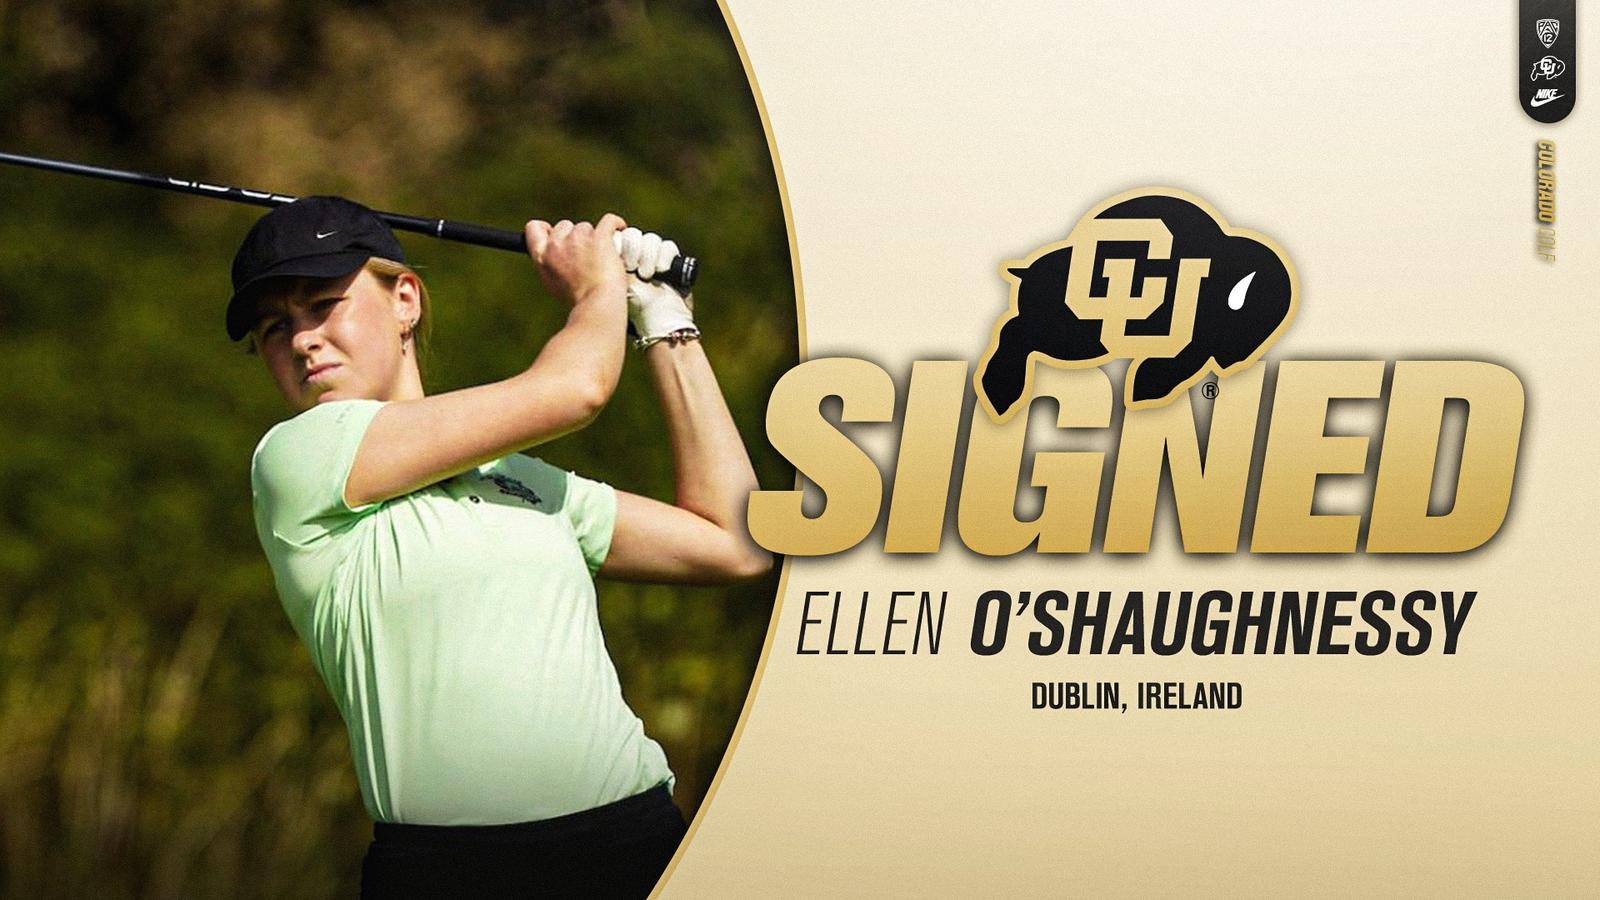 Ellen O’Shaughnessy: Ireland’s U18 Golfer of the Year Commits to University of Colorado Golf Team